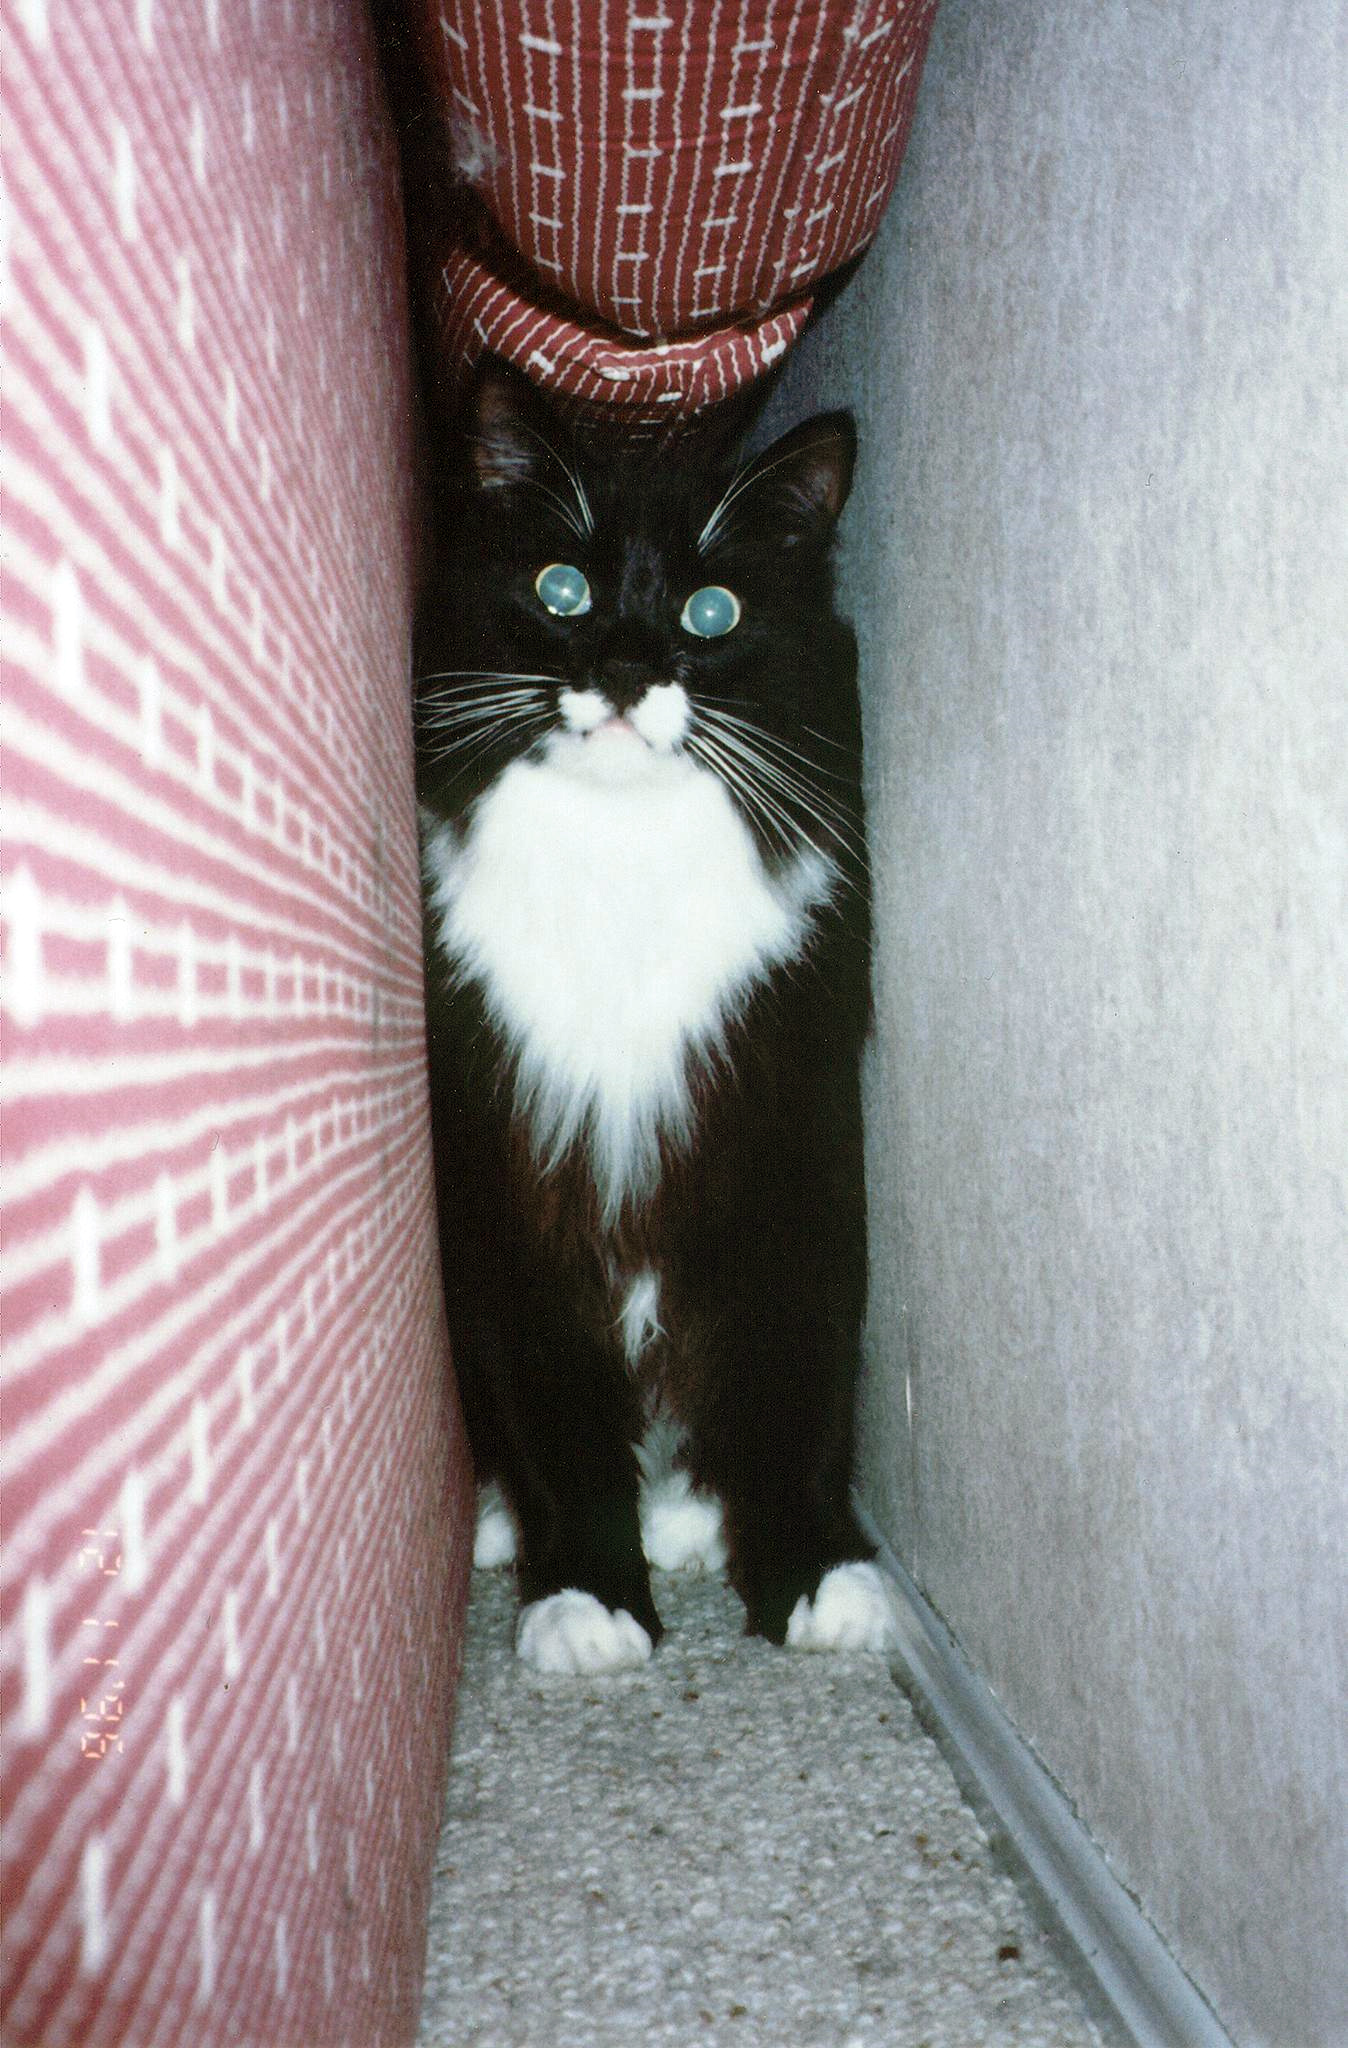 File:Cat hiding.jpg - Wikimedia Commons